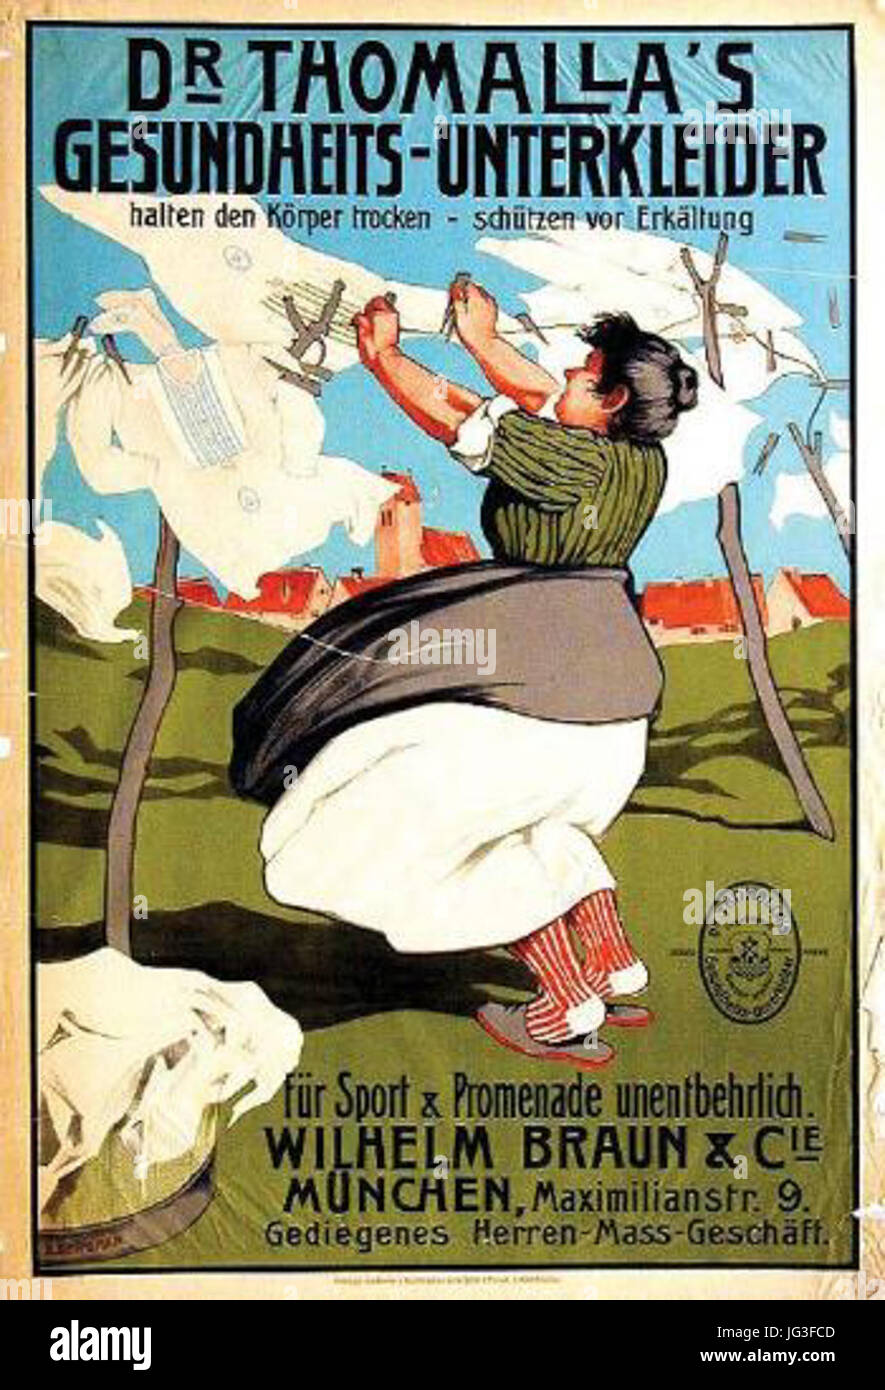 Hermann Bek-Gran - Dr Thomalla s poster Stock Photo